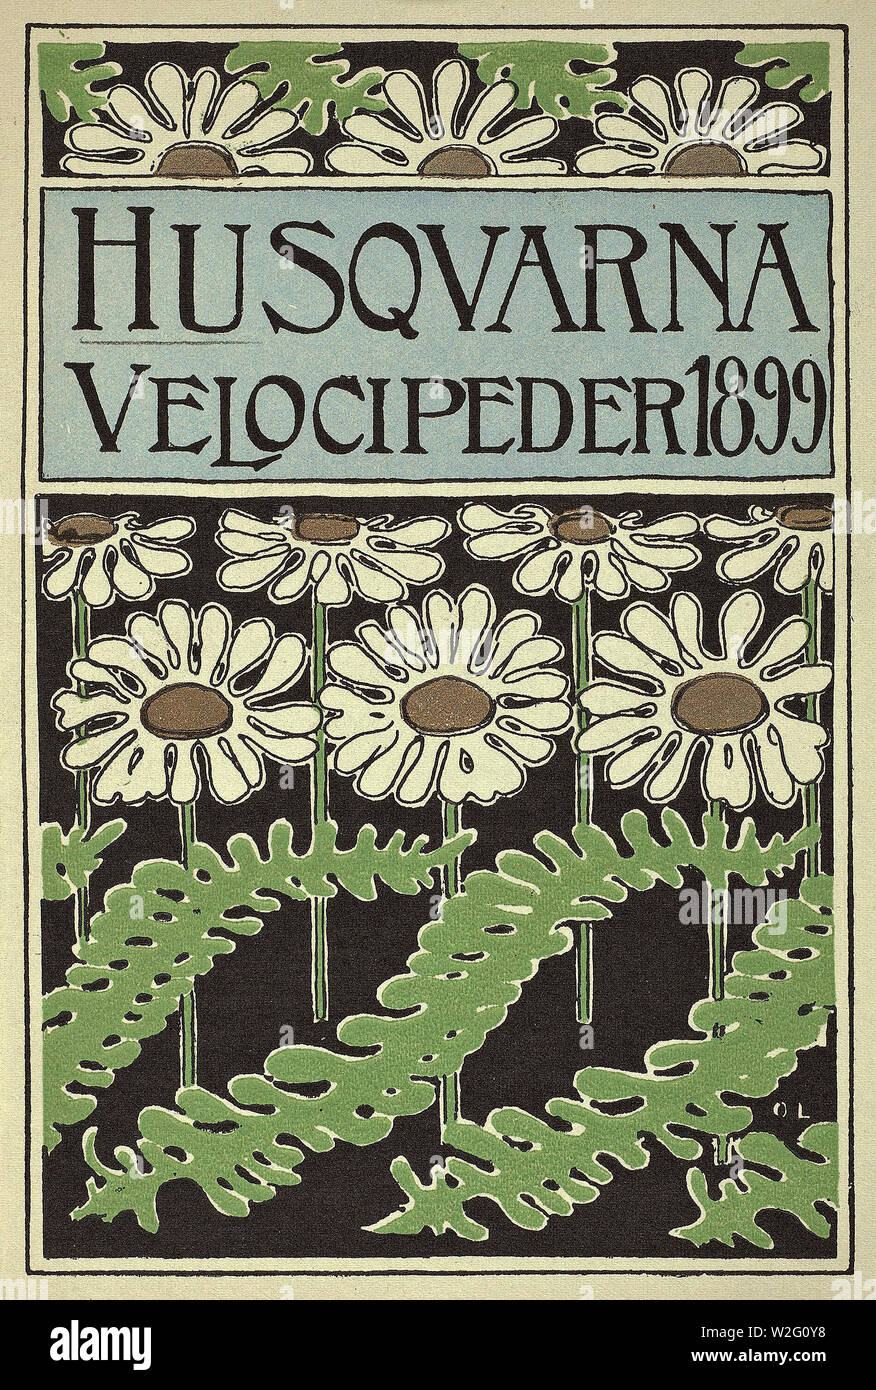 Husqvarna fabriks aktiebolag, Husqvarna 1885-1899 - Husqvarna Velocipeder catalog late 1800s Stock Photo